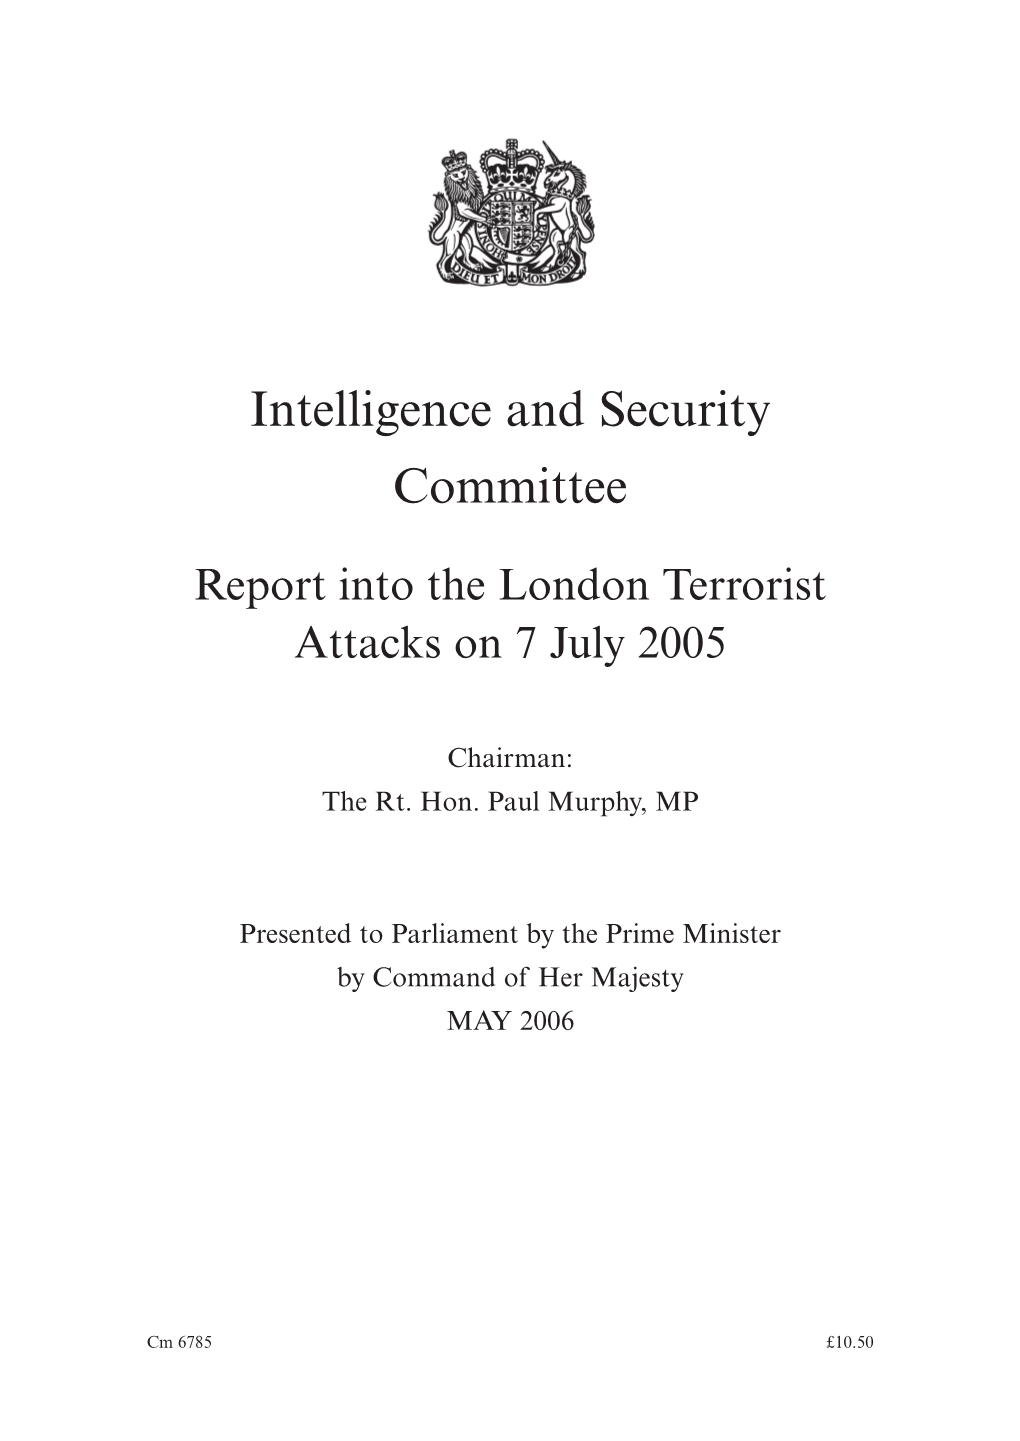 Report Into the London Terrorist Attacks on 7 July 2005